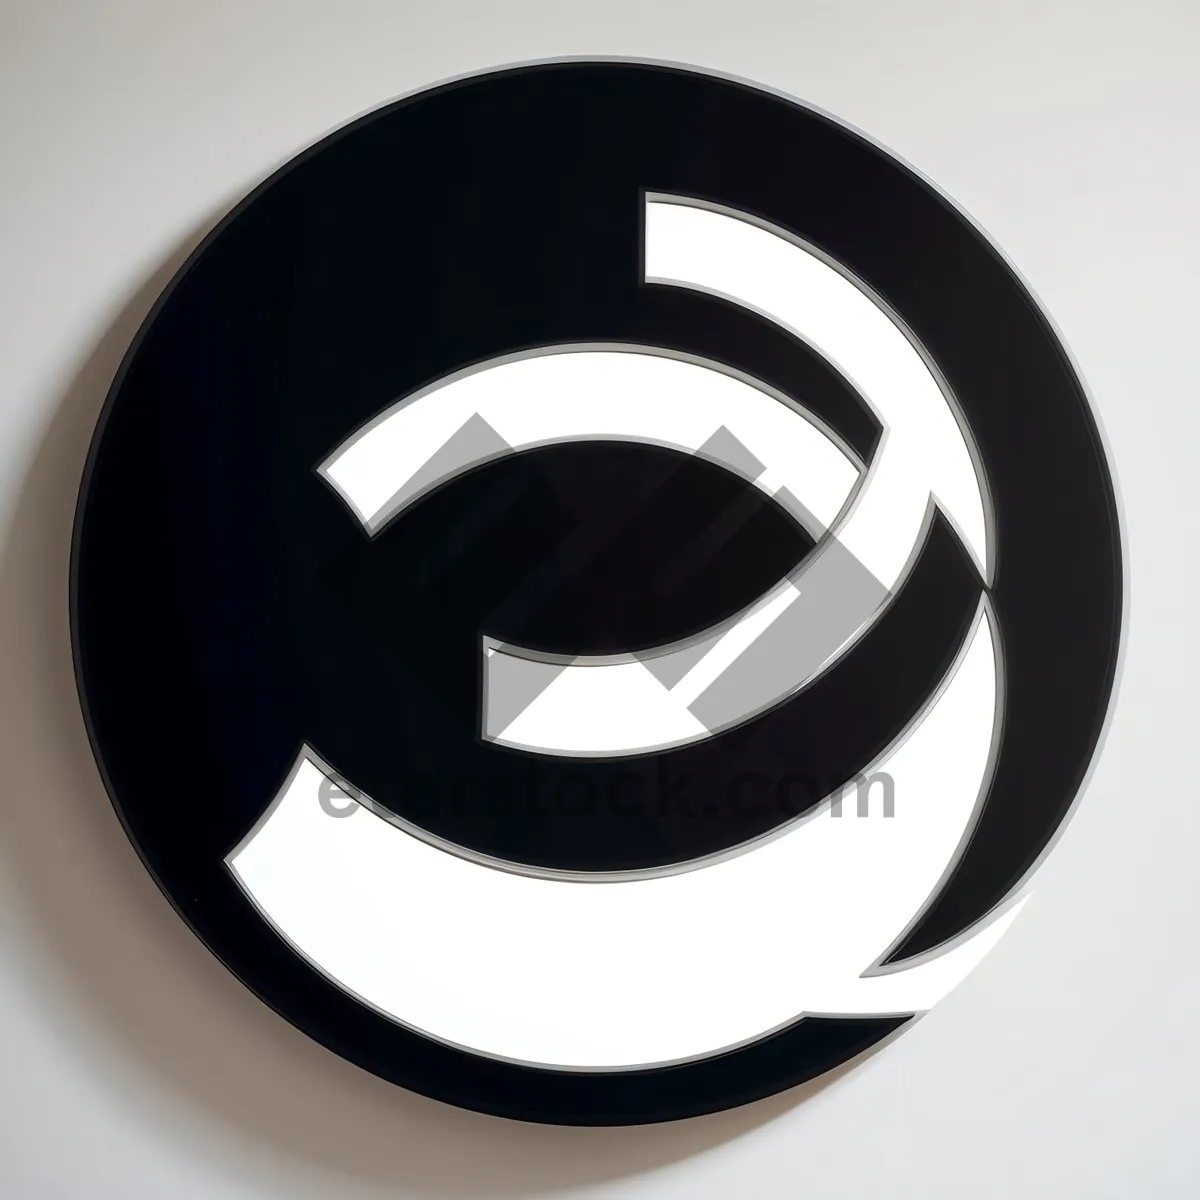 Shiny 3D Circle Icon with Black Metallic Reflection